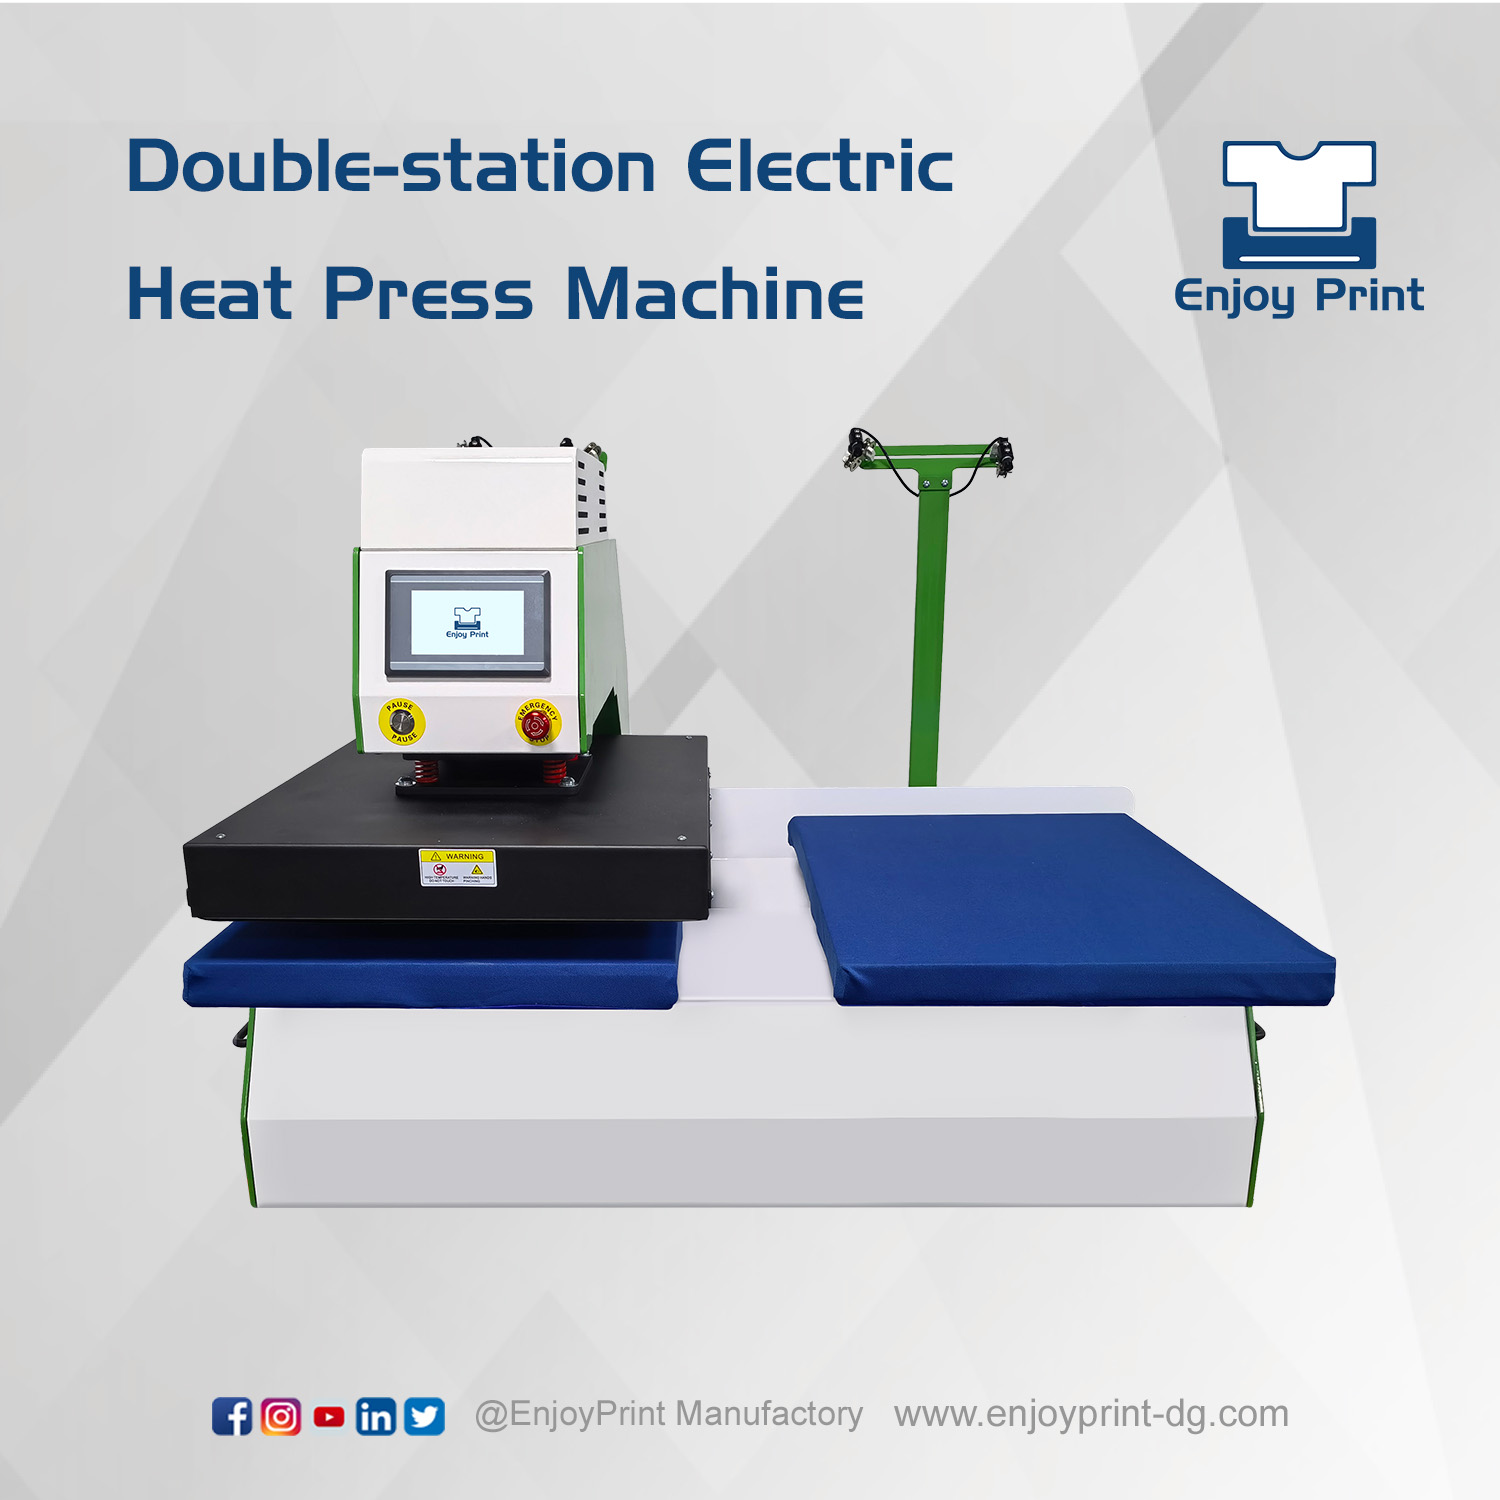 Double-station Electric Heat Press Machine